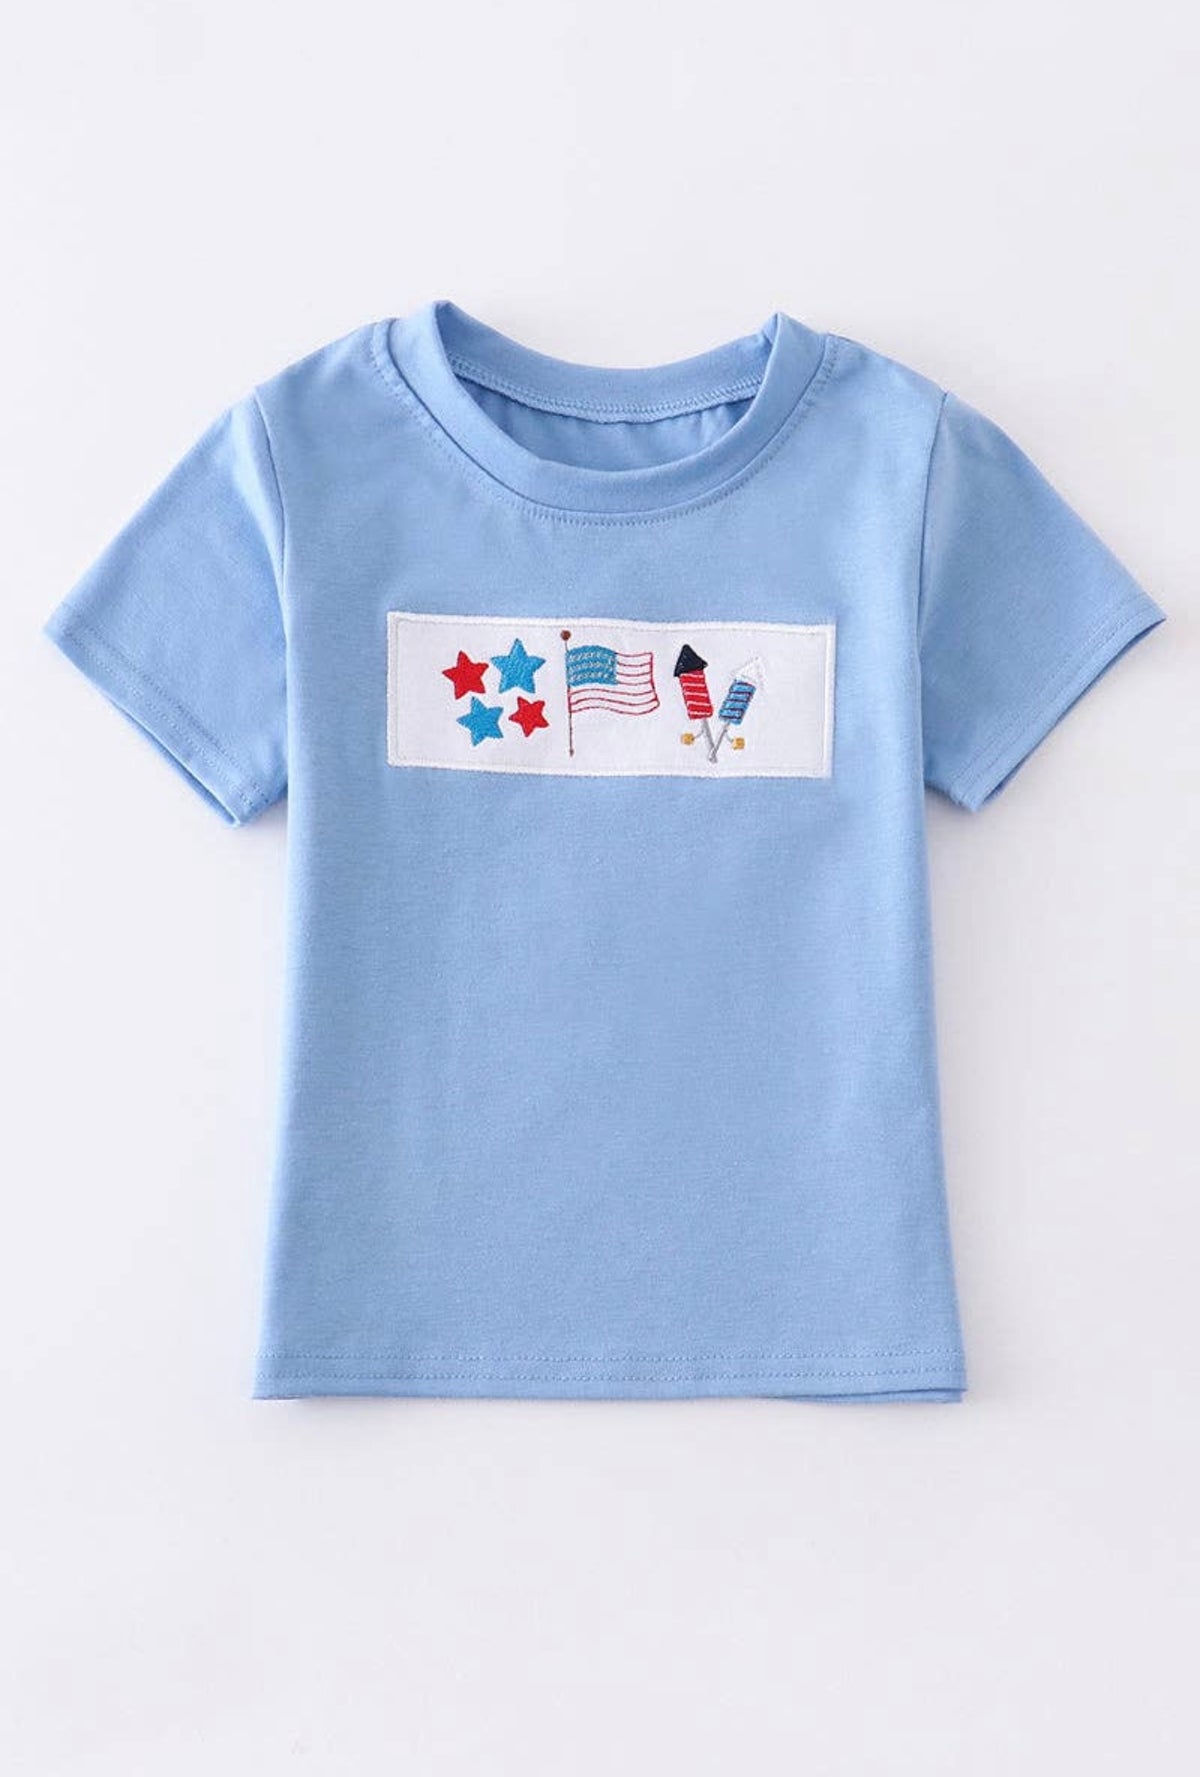 Blue Patriotic Flag Embroidery Boy Top